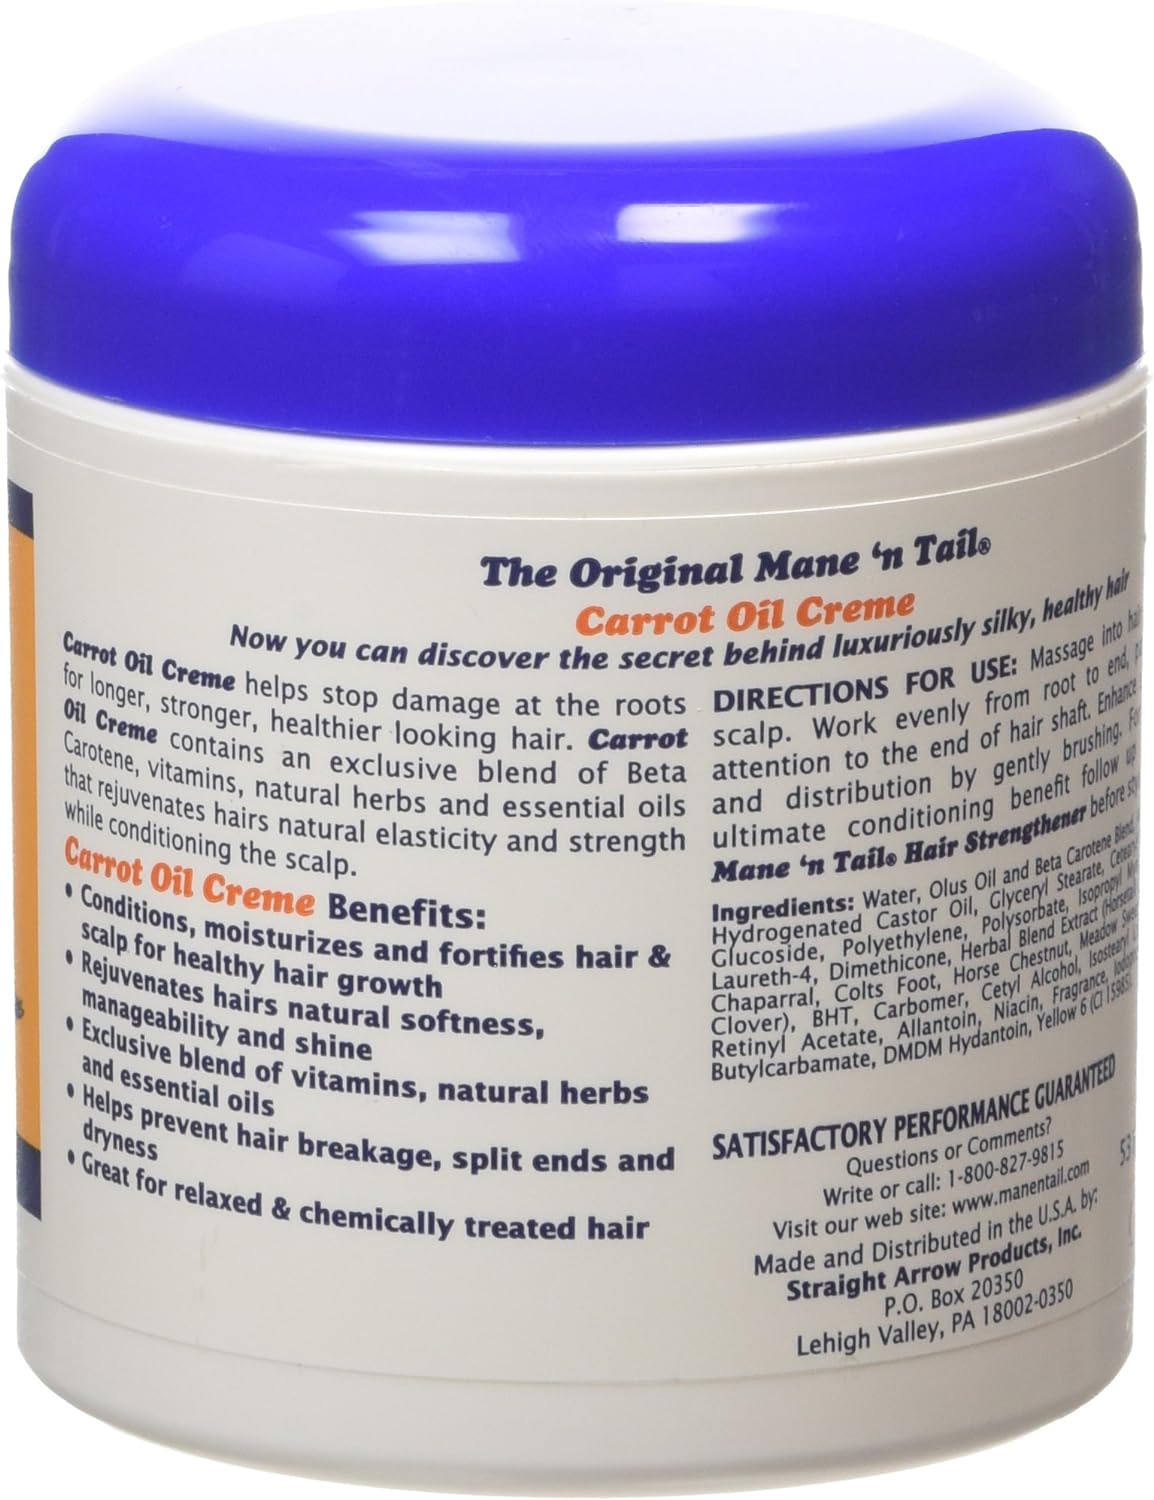 Carrot Oil Creme Natural Moisture Balancing Treatment » Power Your Curls